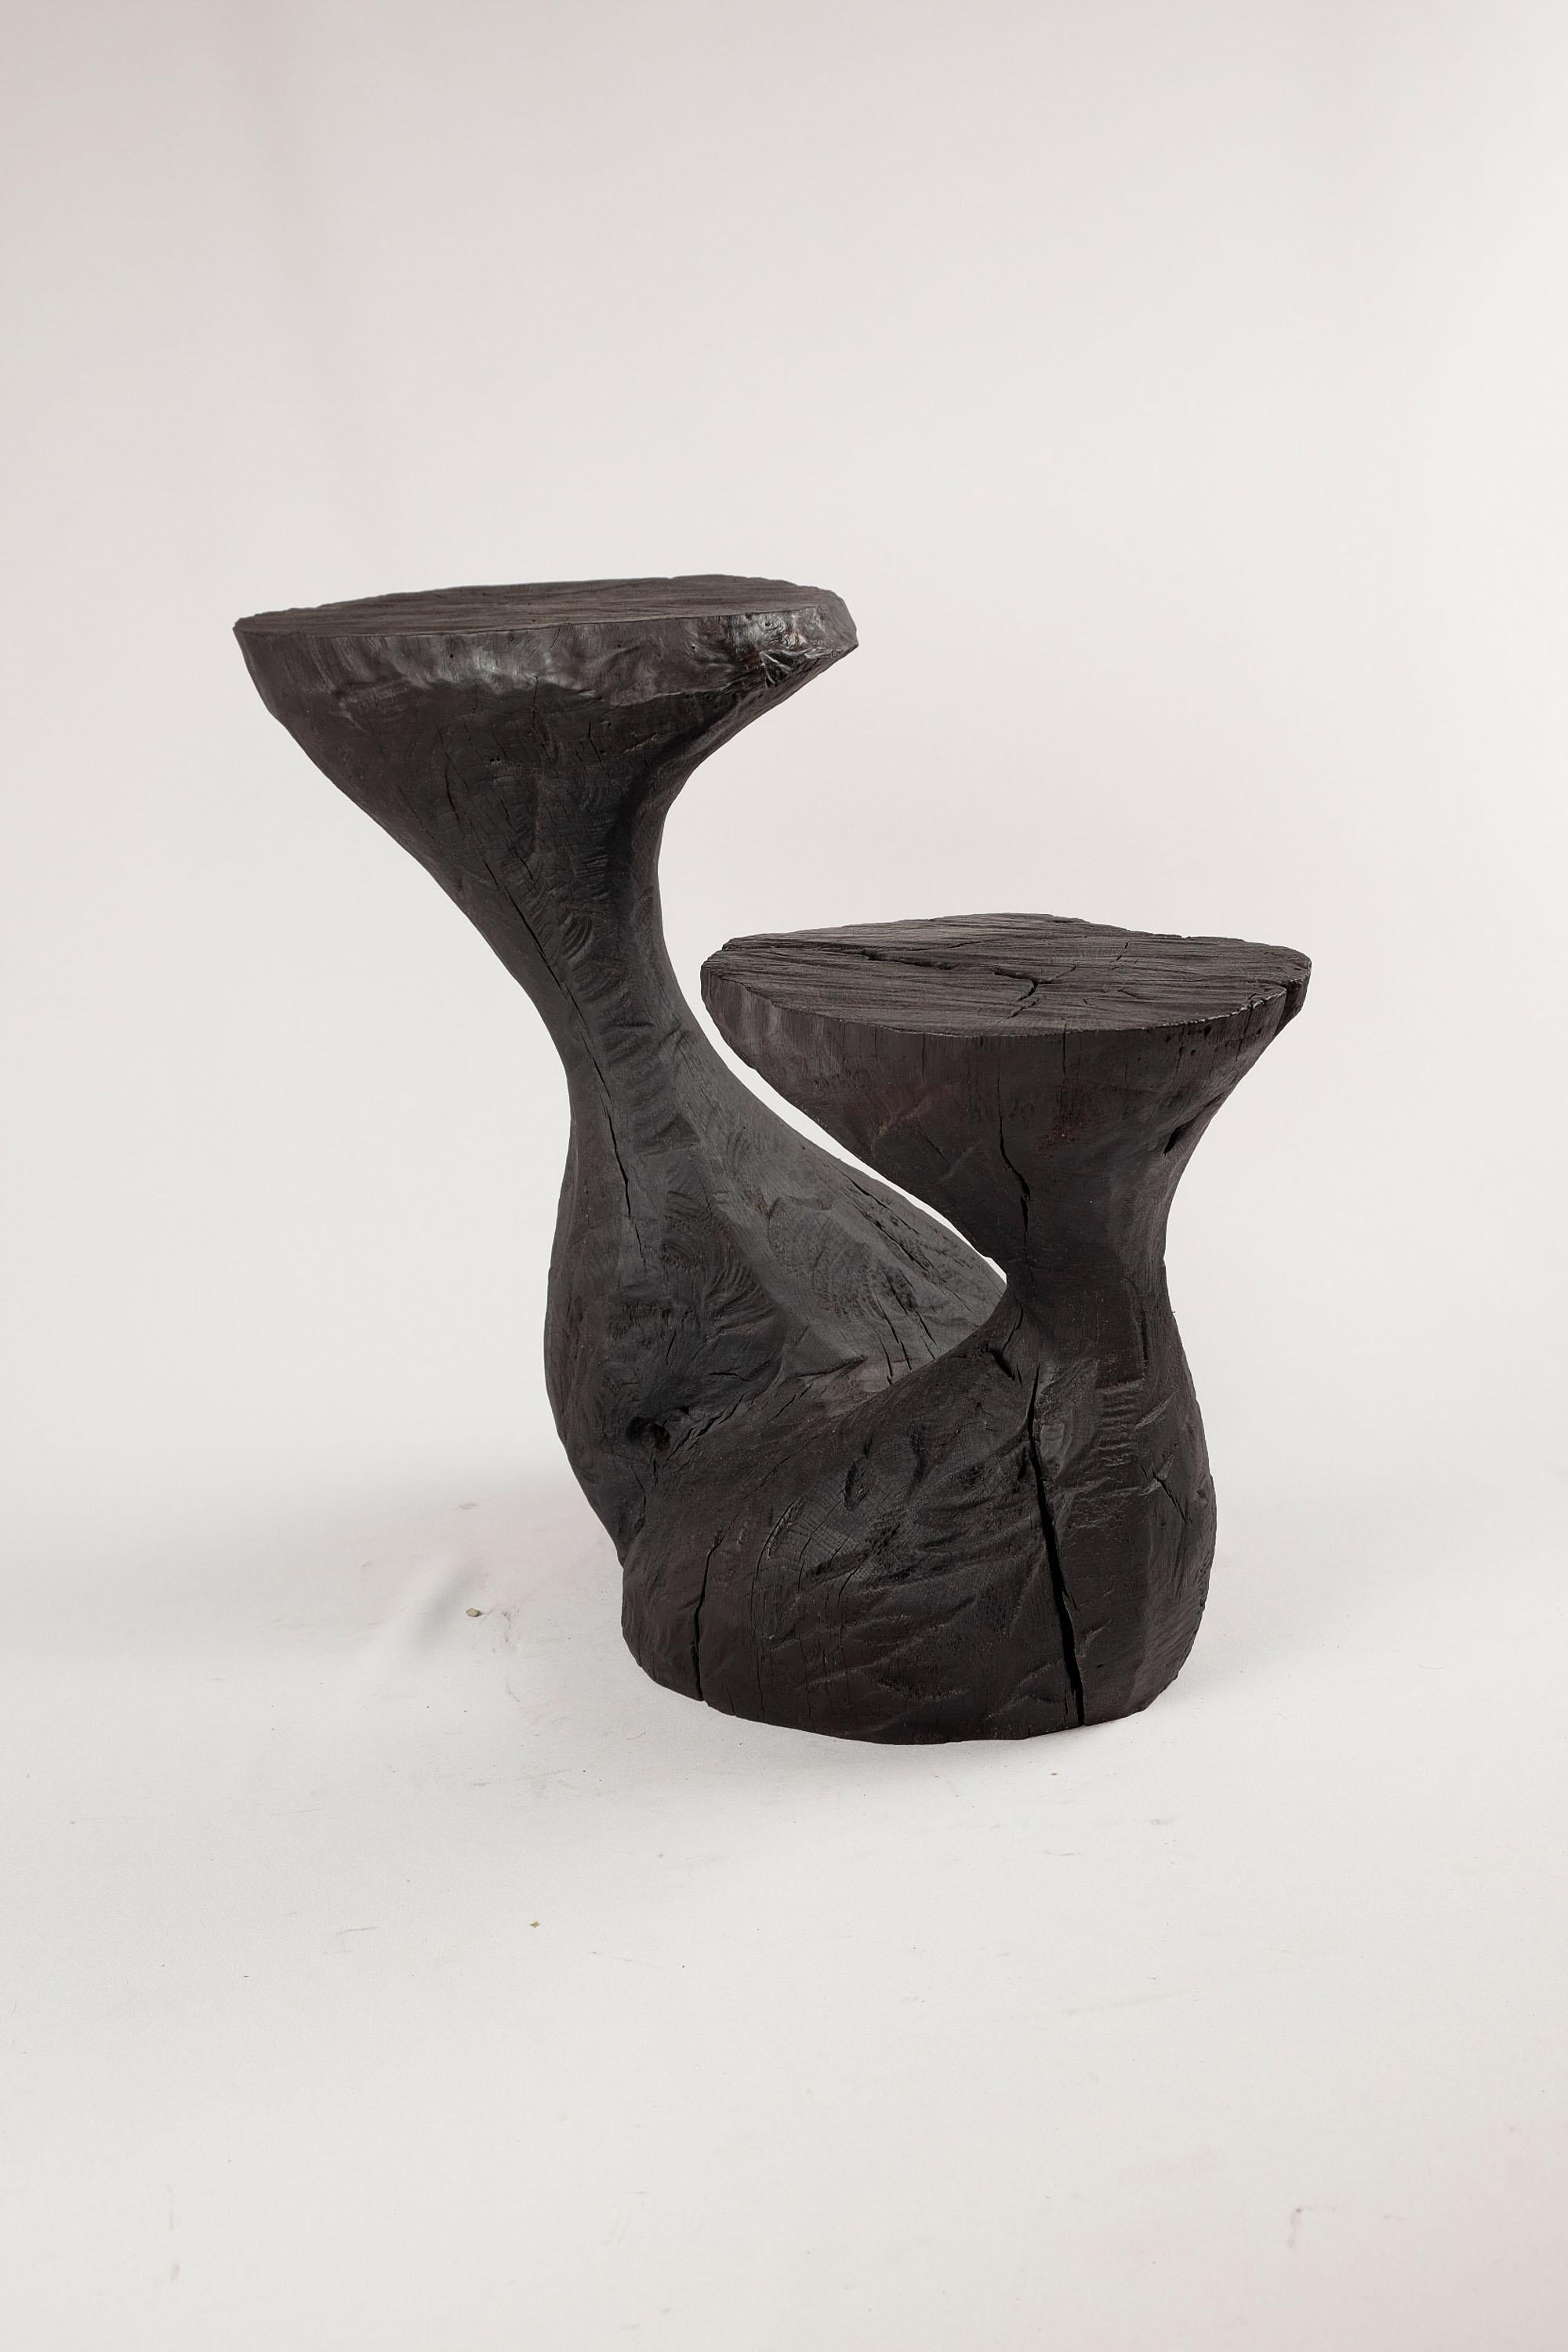 Solid Burnt Wood, Sculptural Side Table, Original Contemporary Design, Logniture 3